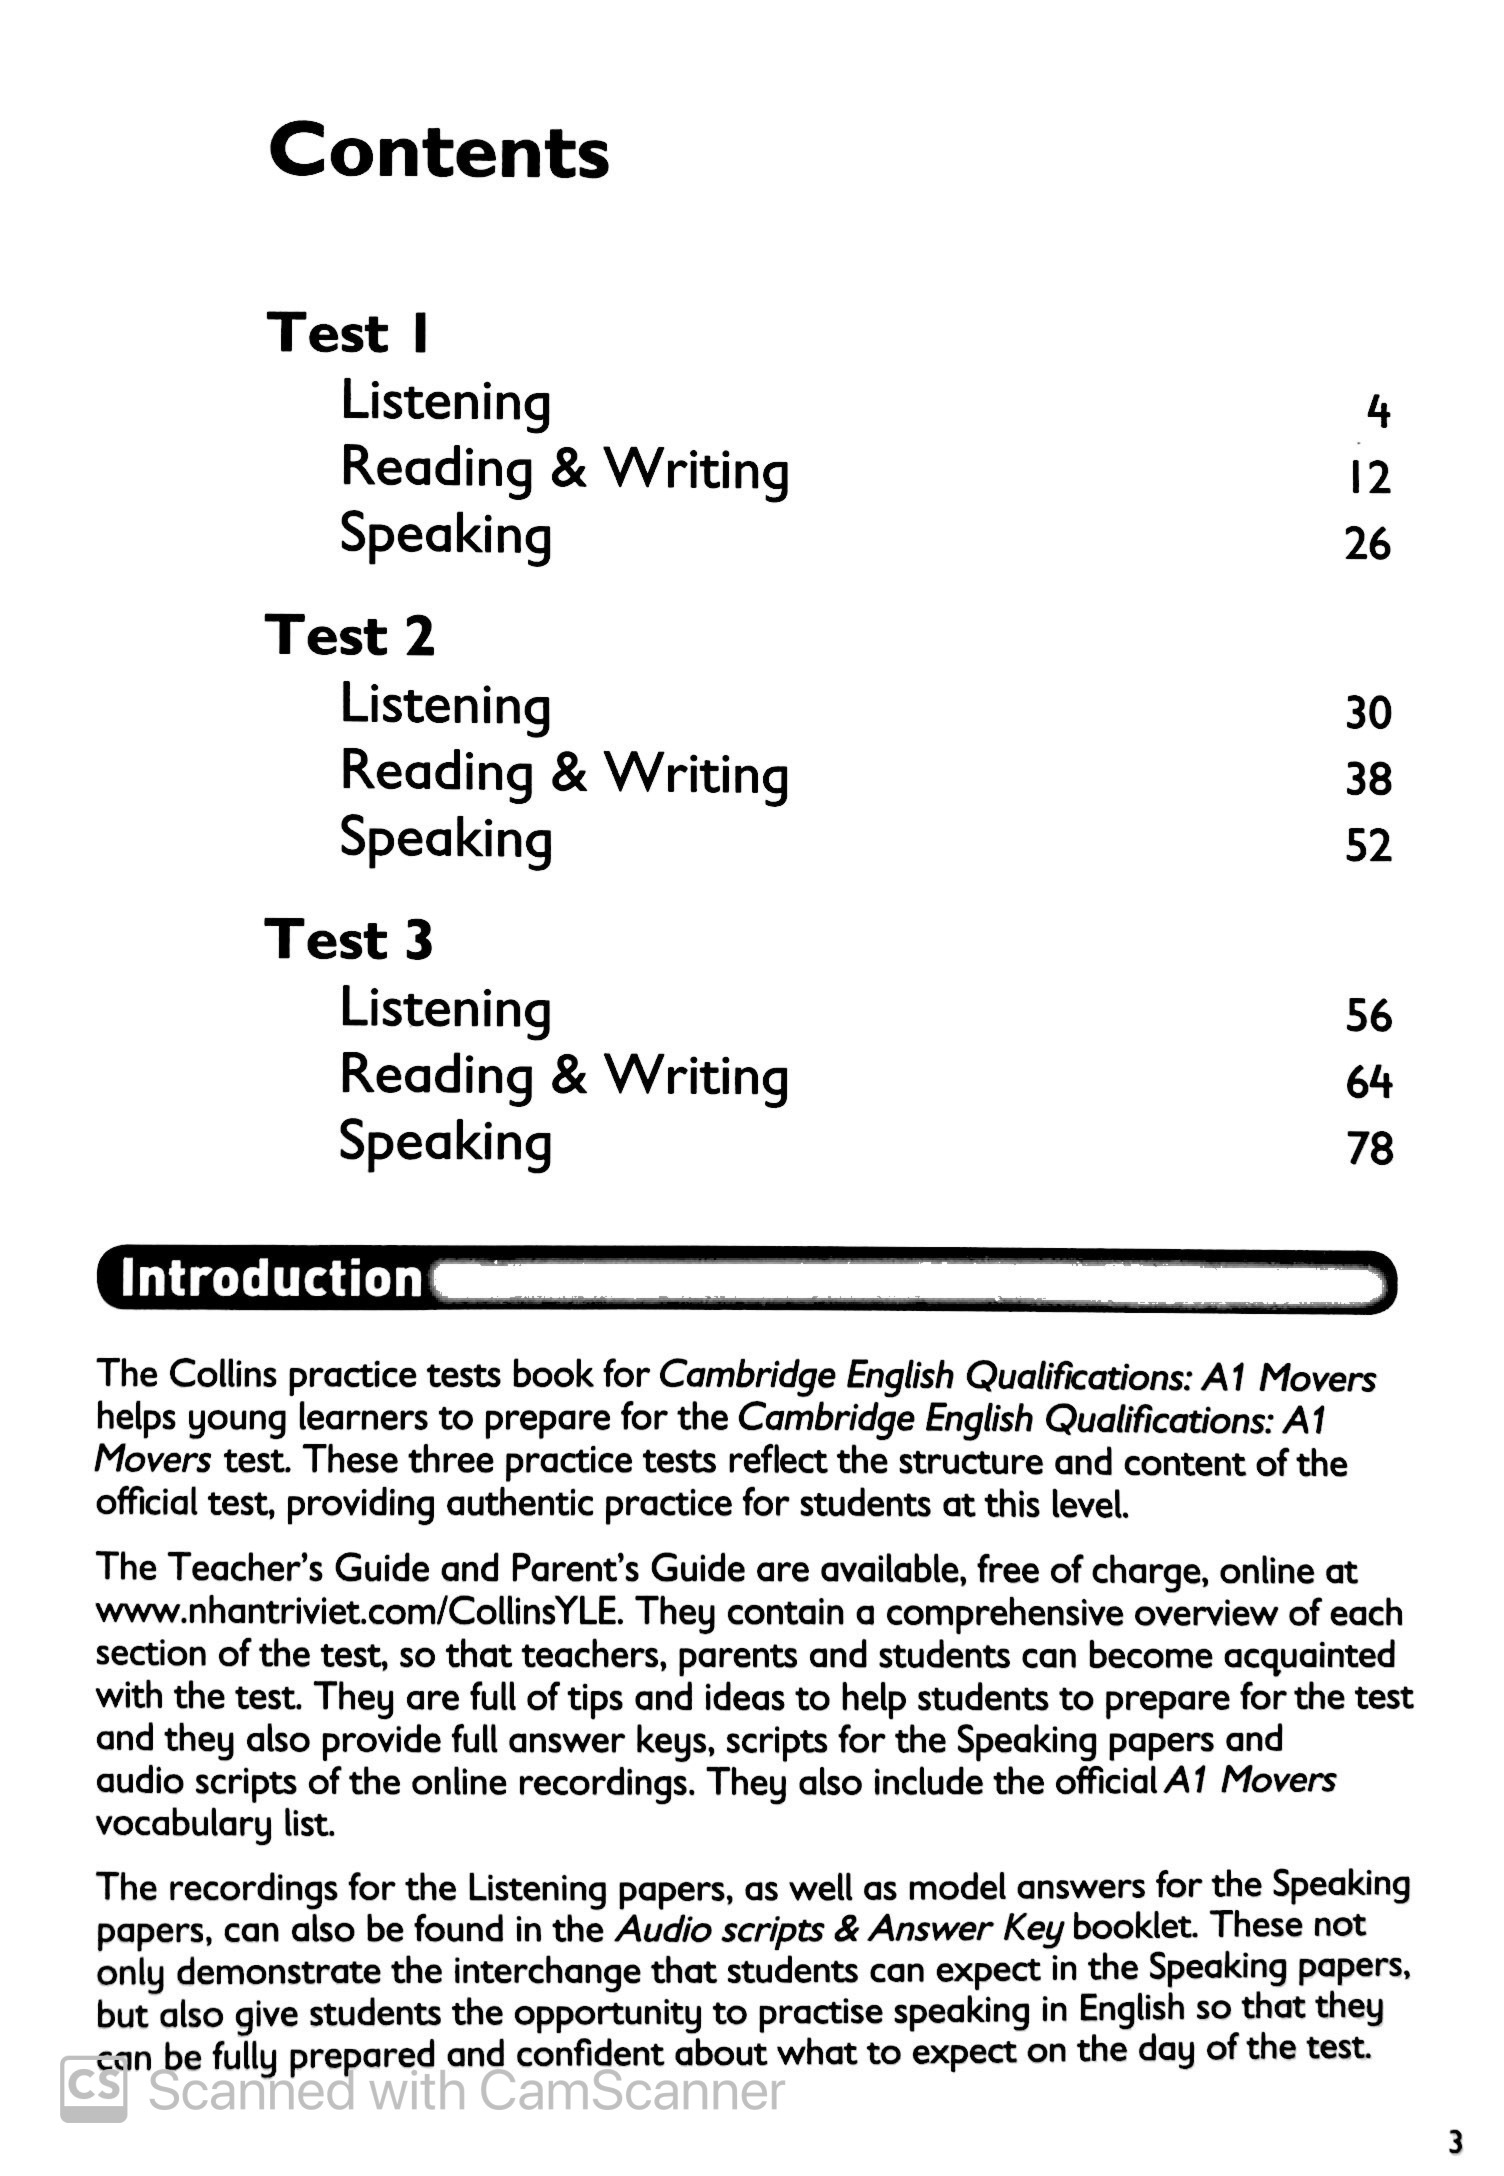 Cambridge English Qualifications - A1 Movers PDF